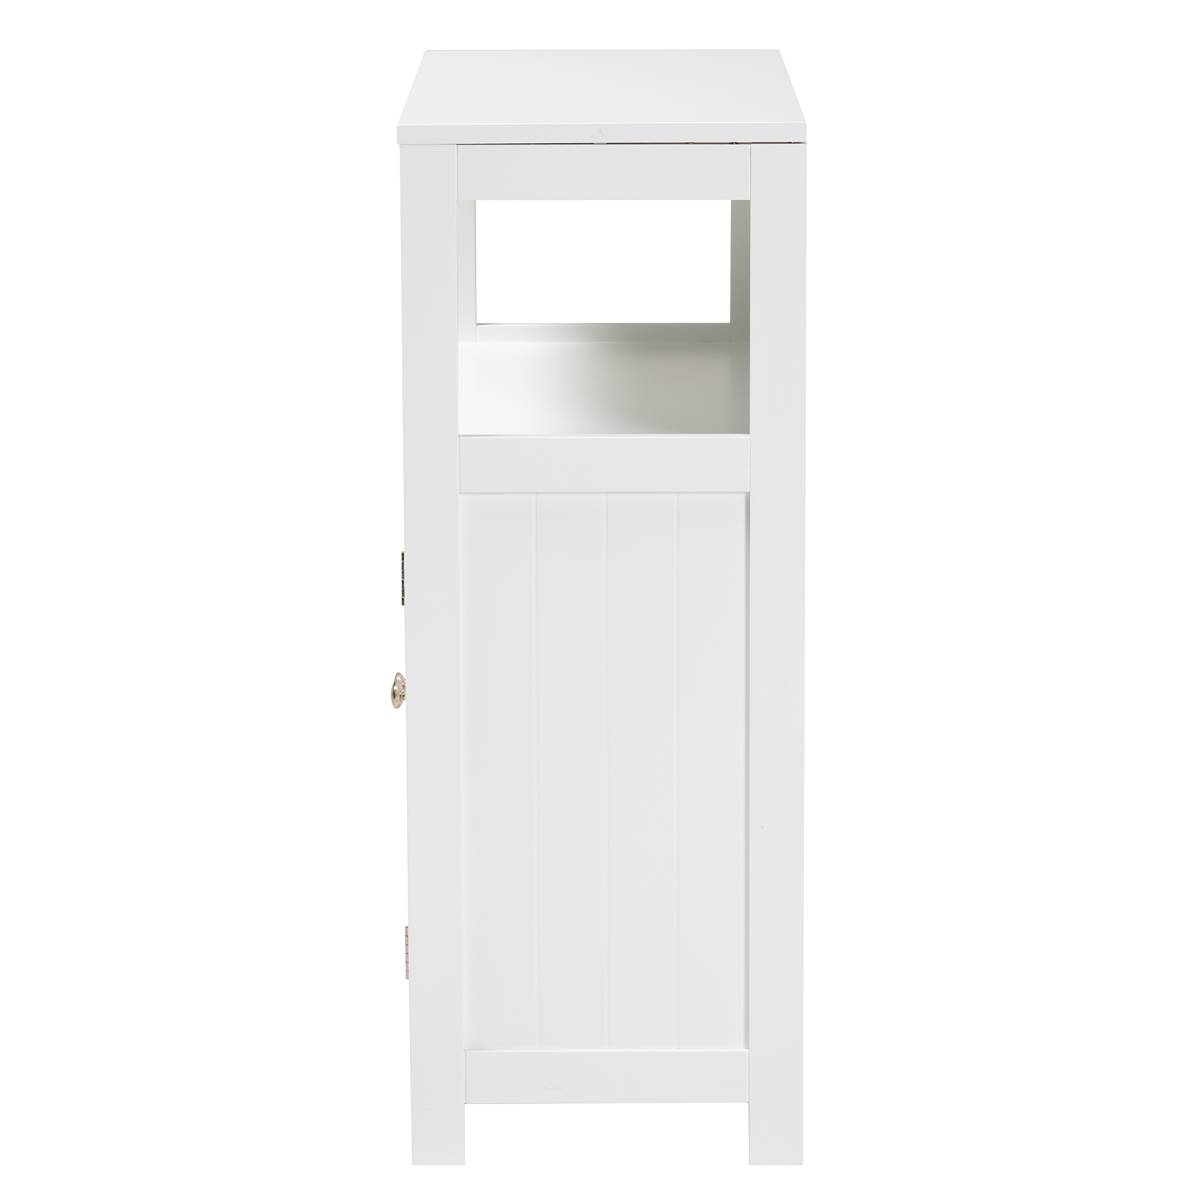 Baxton Studio Rivera White Wood 2-Door Bathroom Cabinet